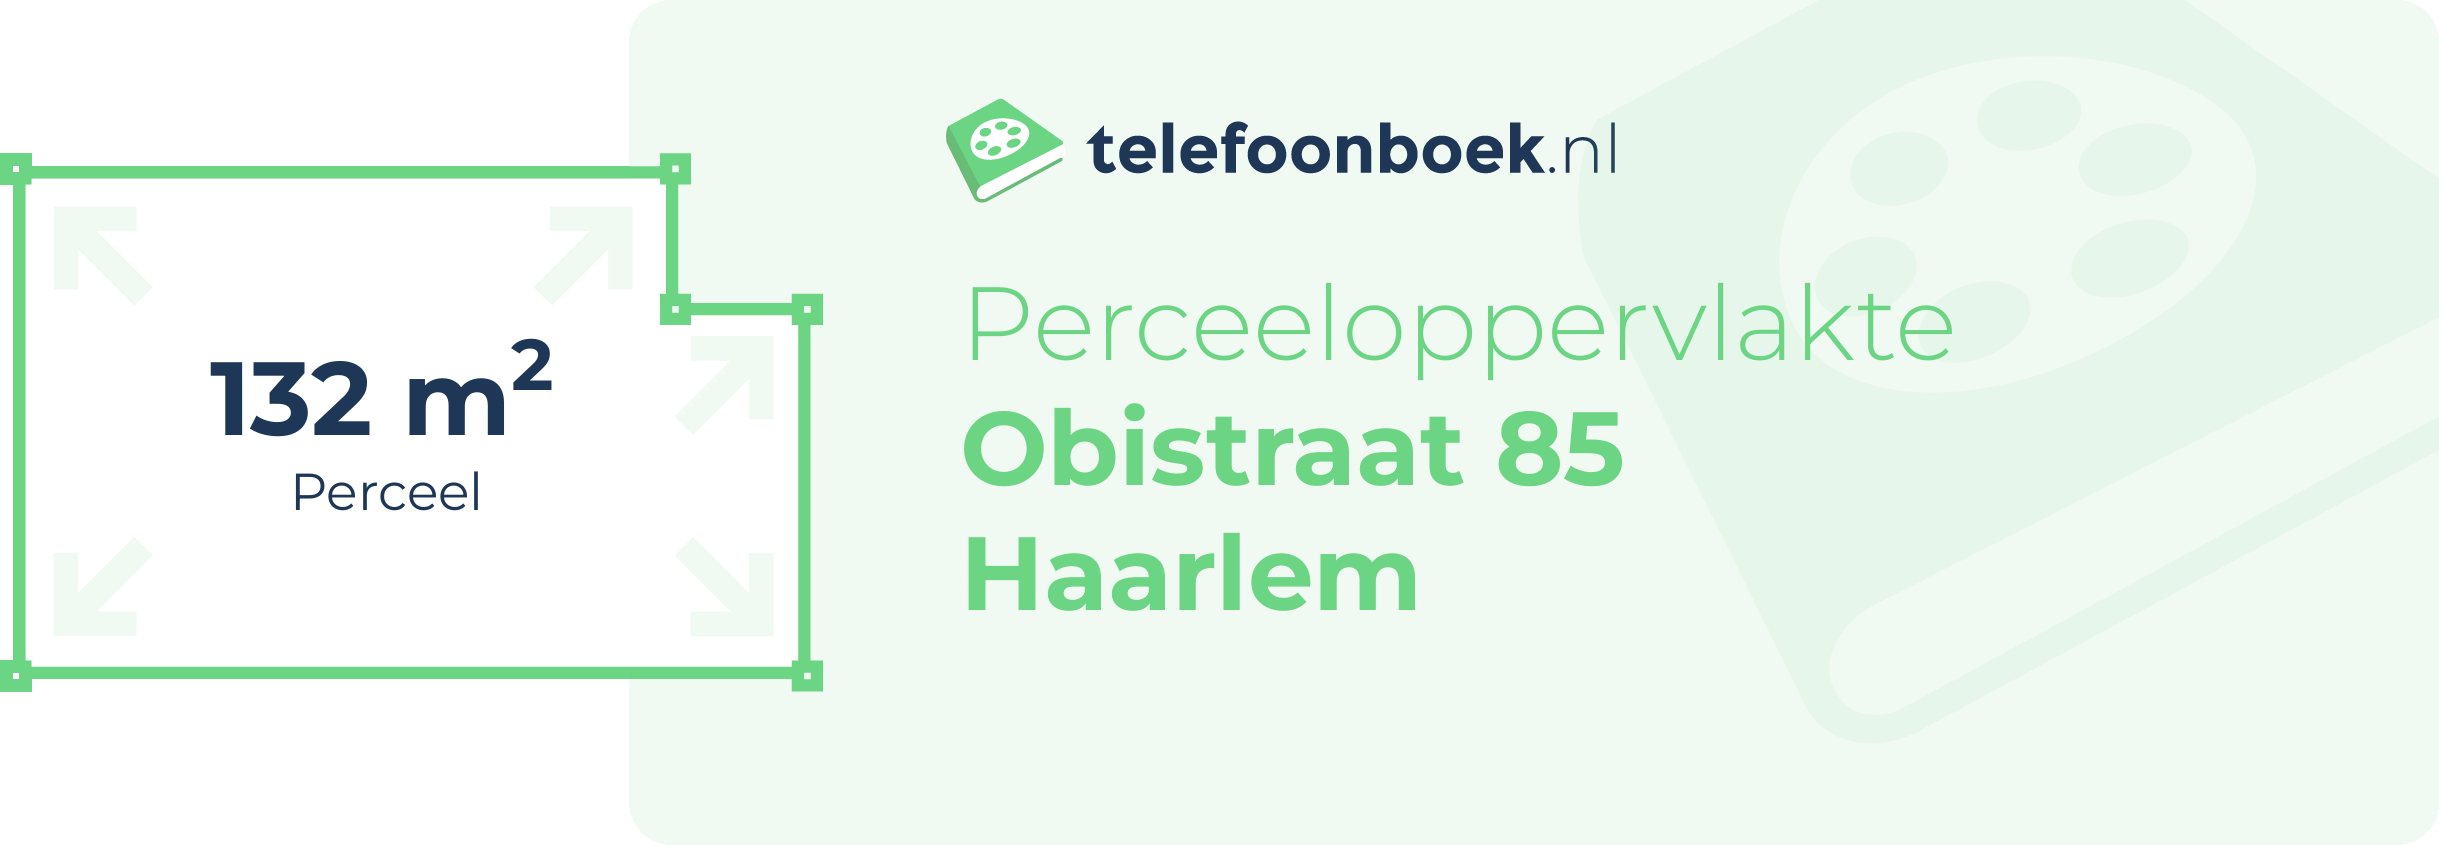 Perceeloppervlakte Obistraat 85 Haarlem